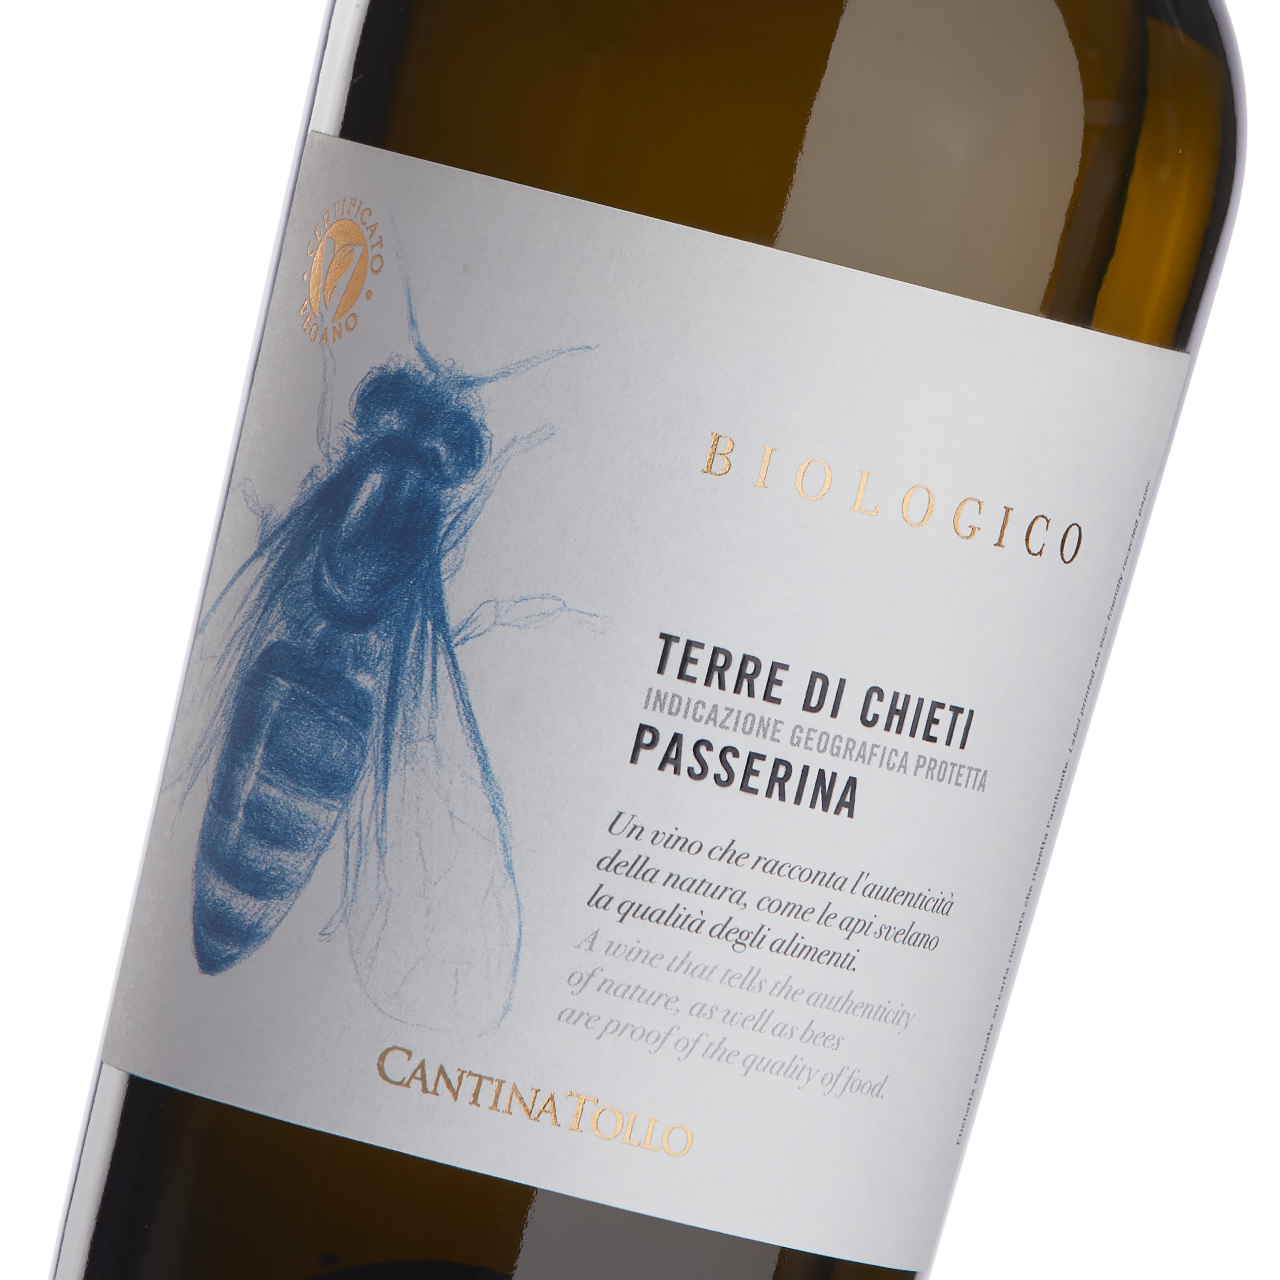 Økologisk hvidvin fra Abruzzo-regionen i Italien